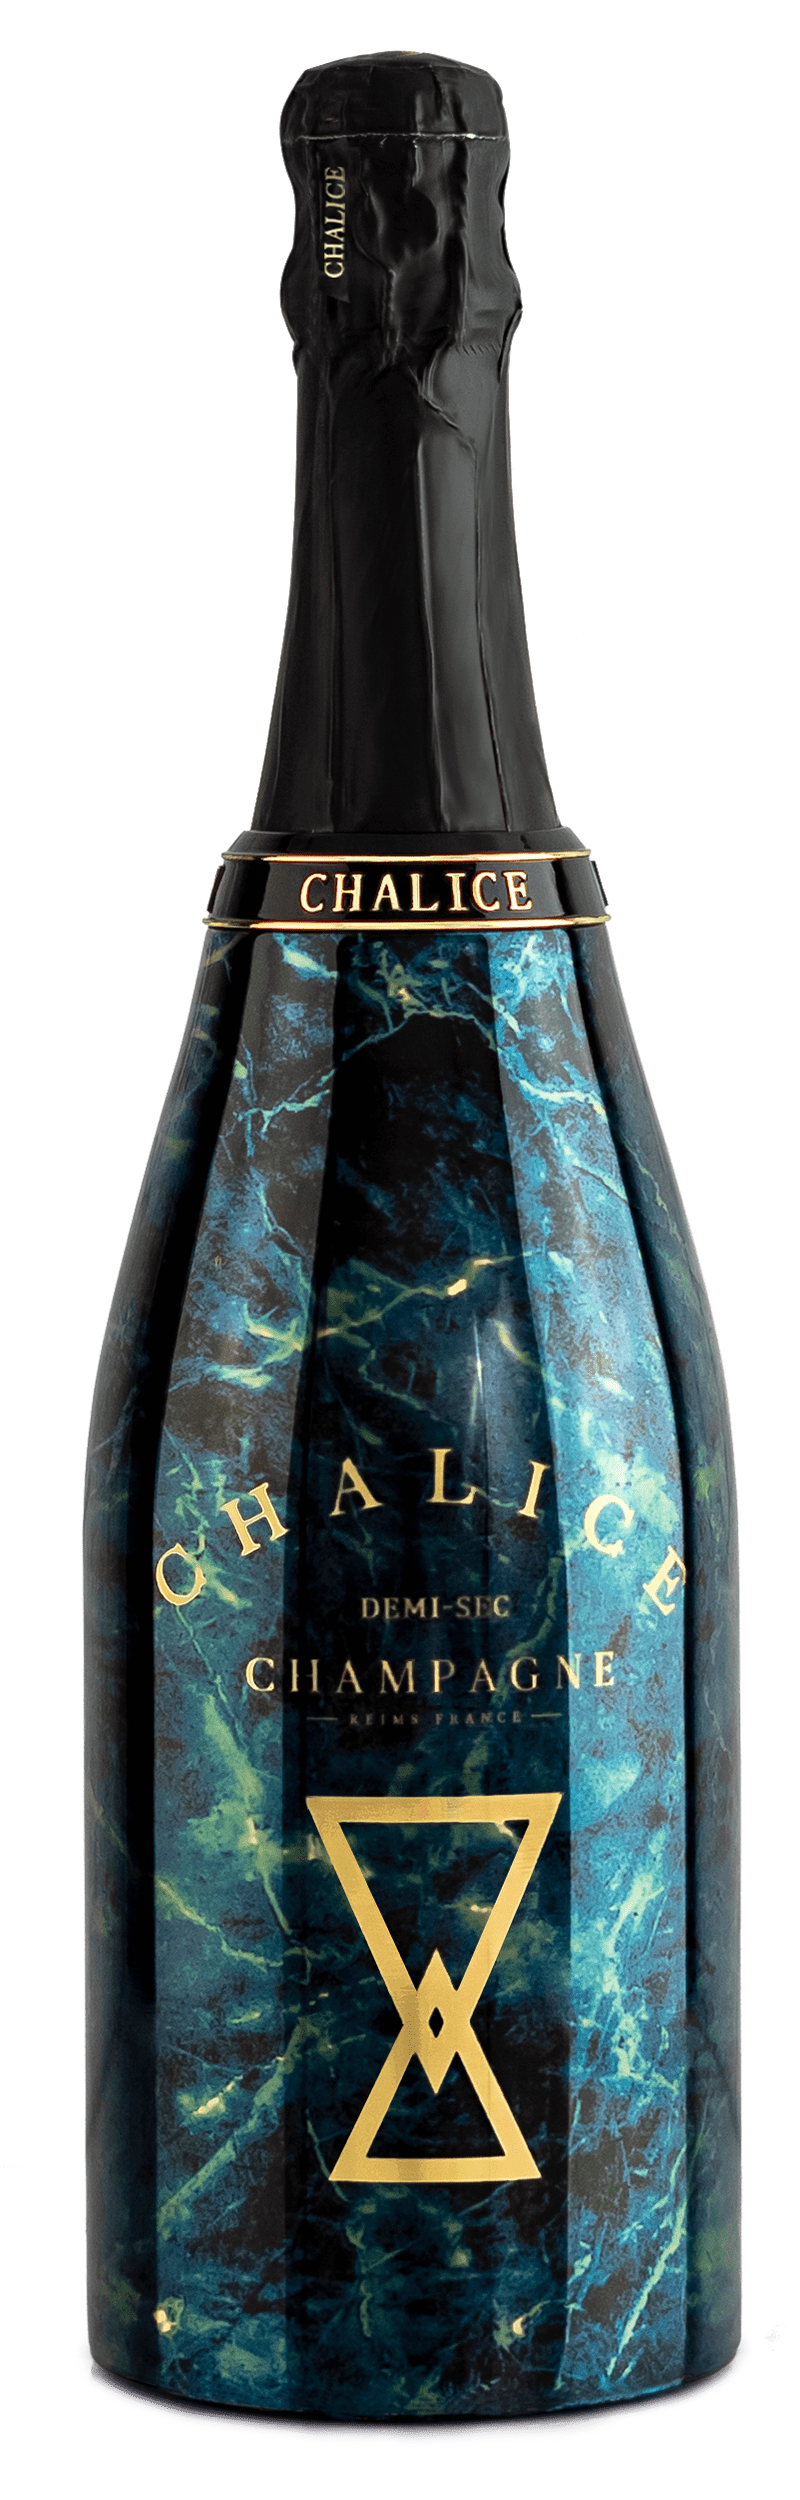 Chalice blue bottle - Demi-Sec